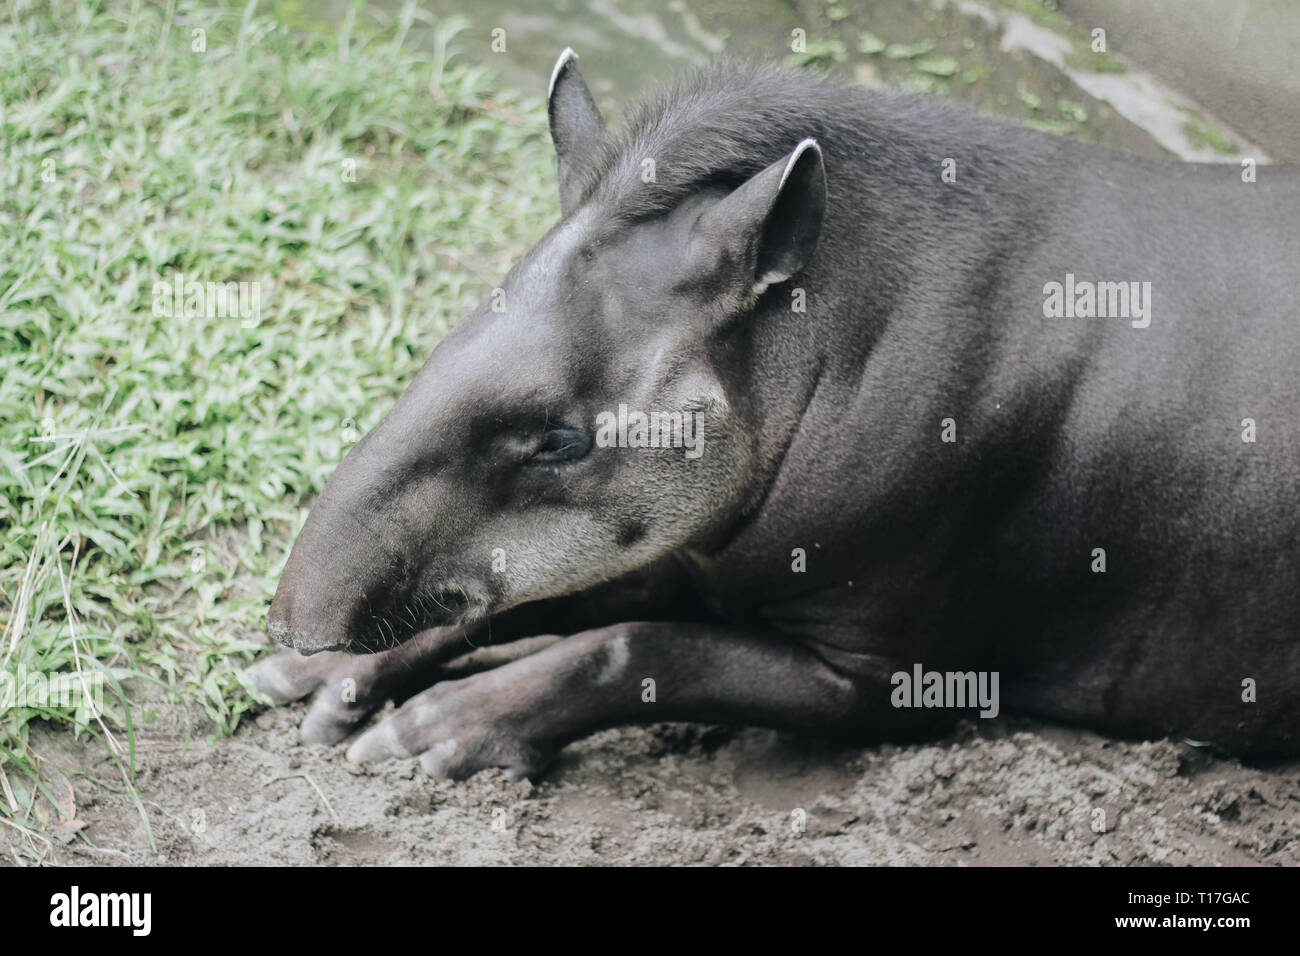 South American tapir (Tapirus terrestris), also known as the Brazilian tapir. Rare animal in captivity. Stock Photo